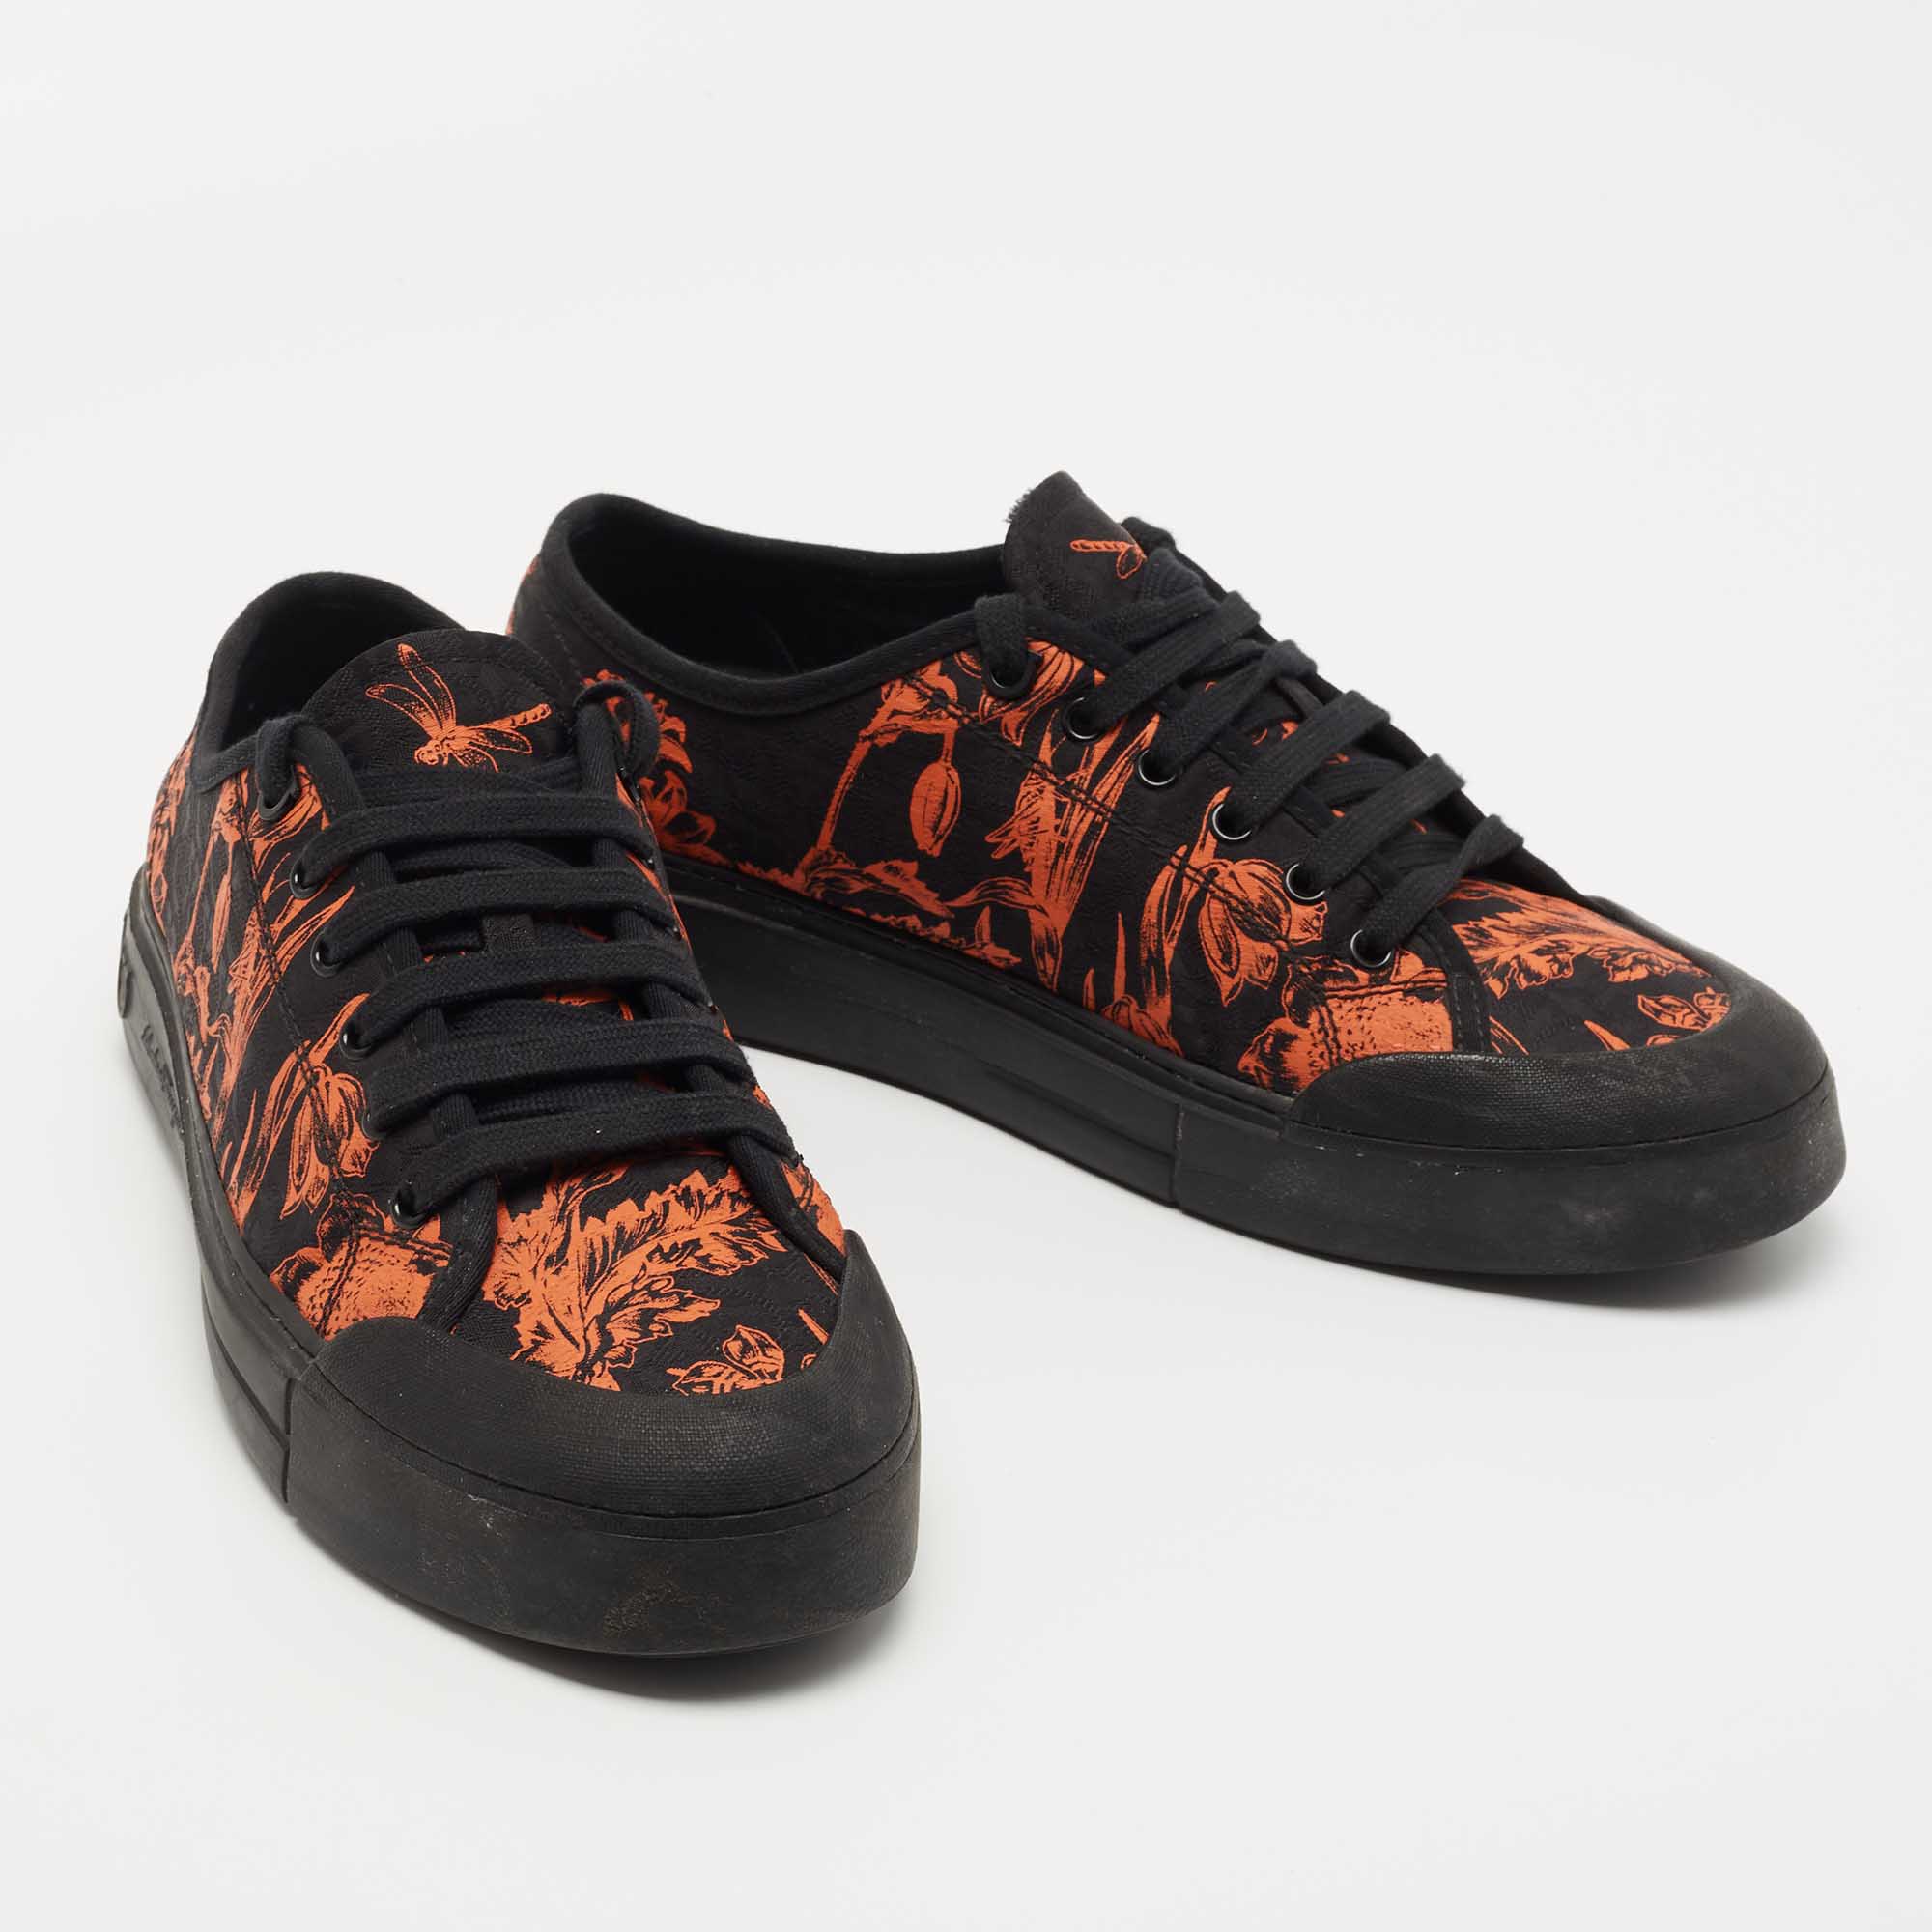 Salvatore Ferragamo Black/Red Brocade Fabric Rebel Printed Low Top Sneakers Size 42.5